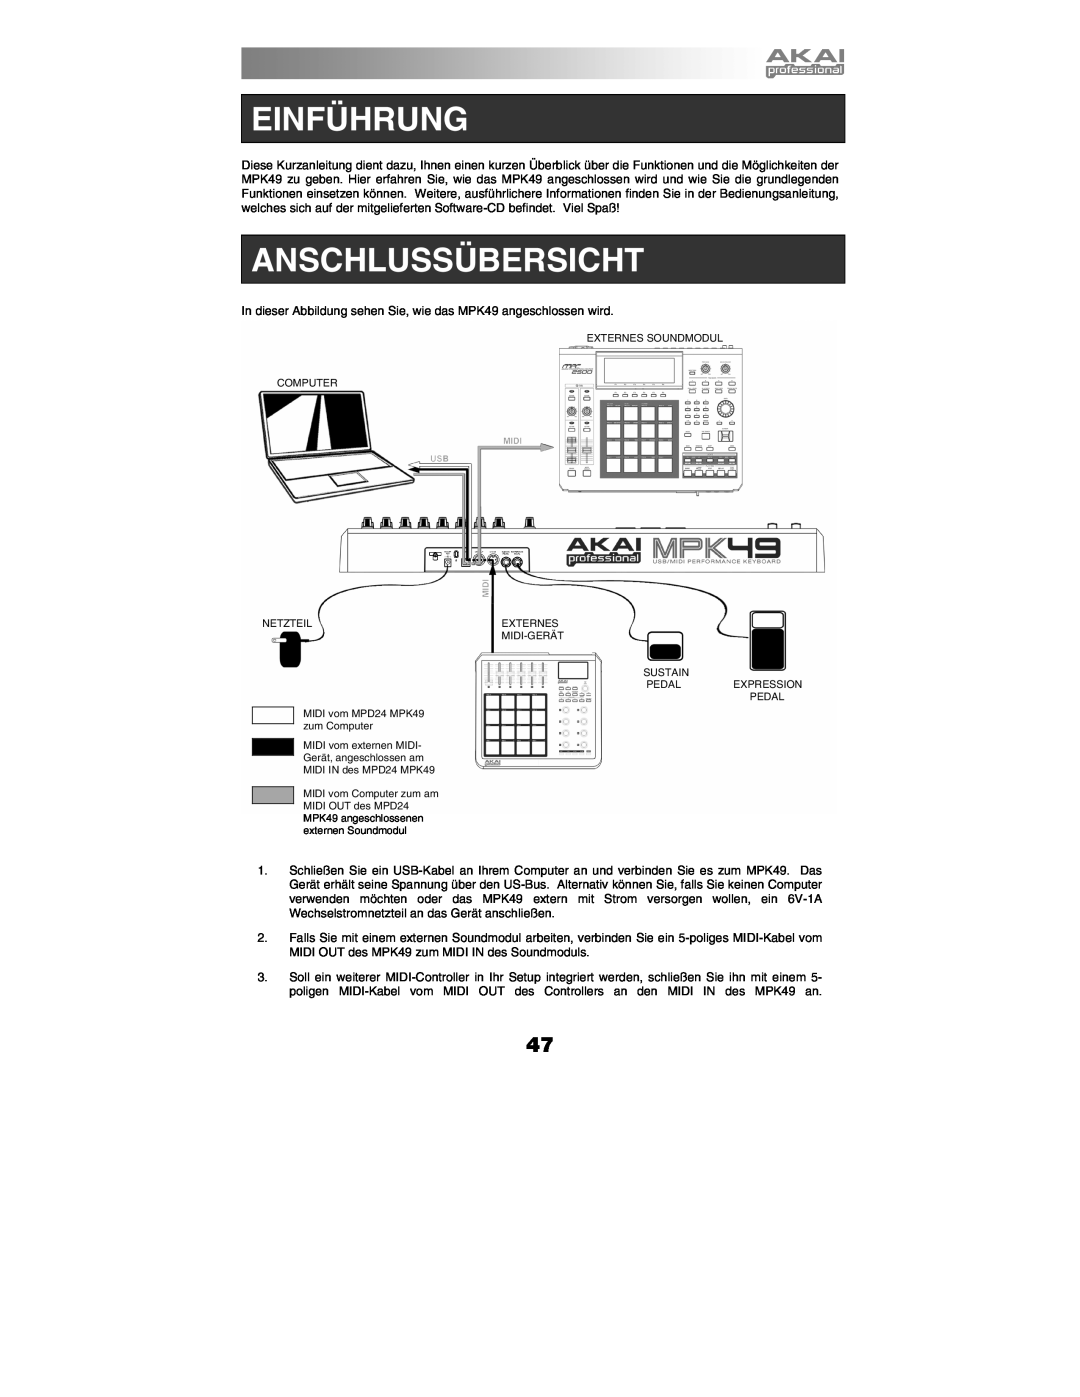 Akai MPK49 quick start manual Einführung, Anschlussübersicht 